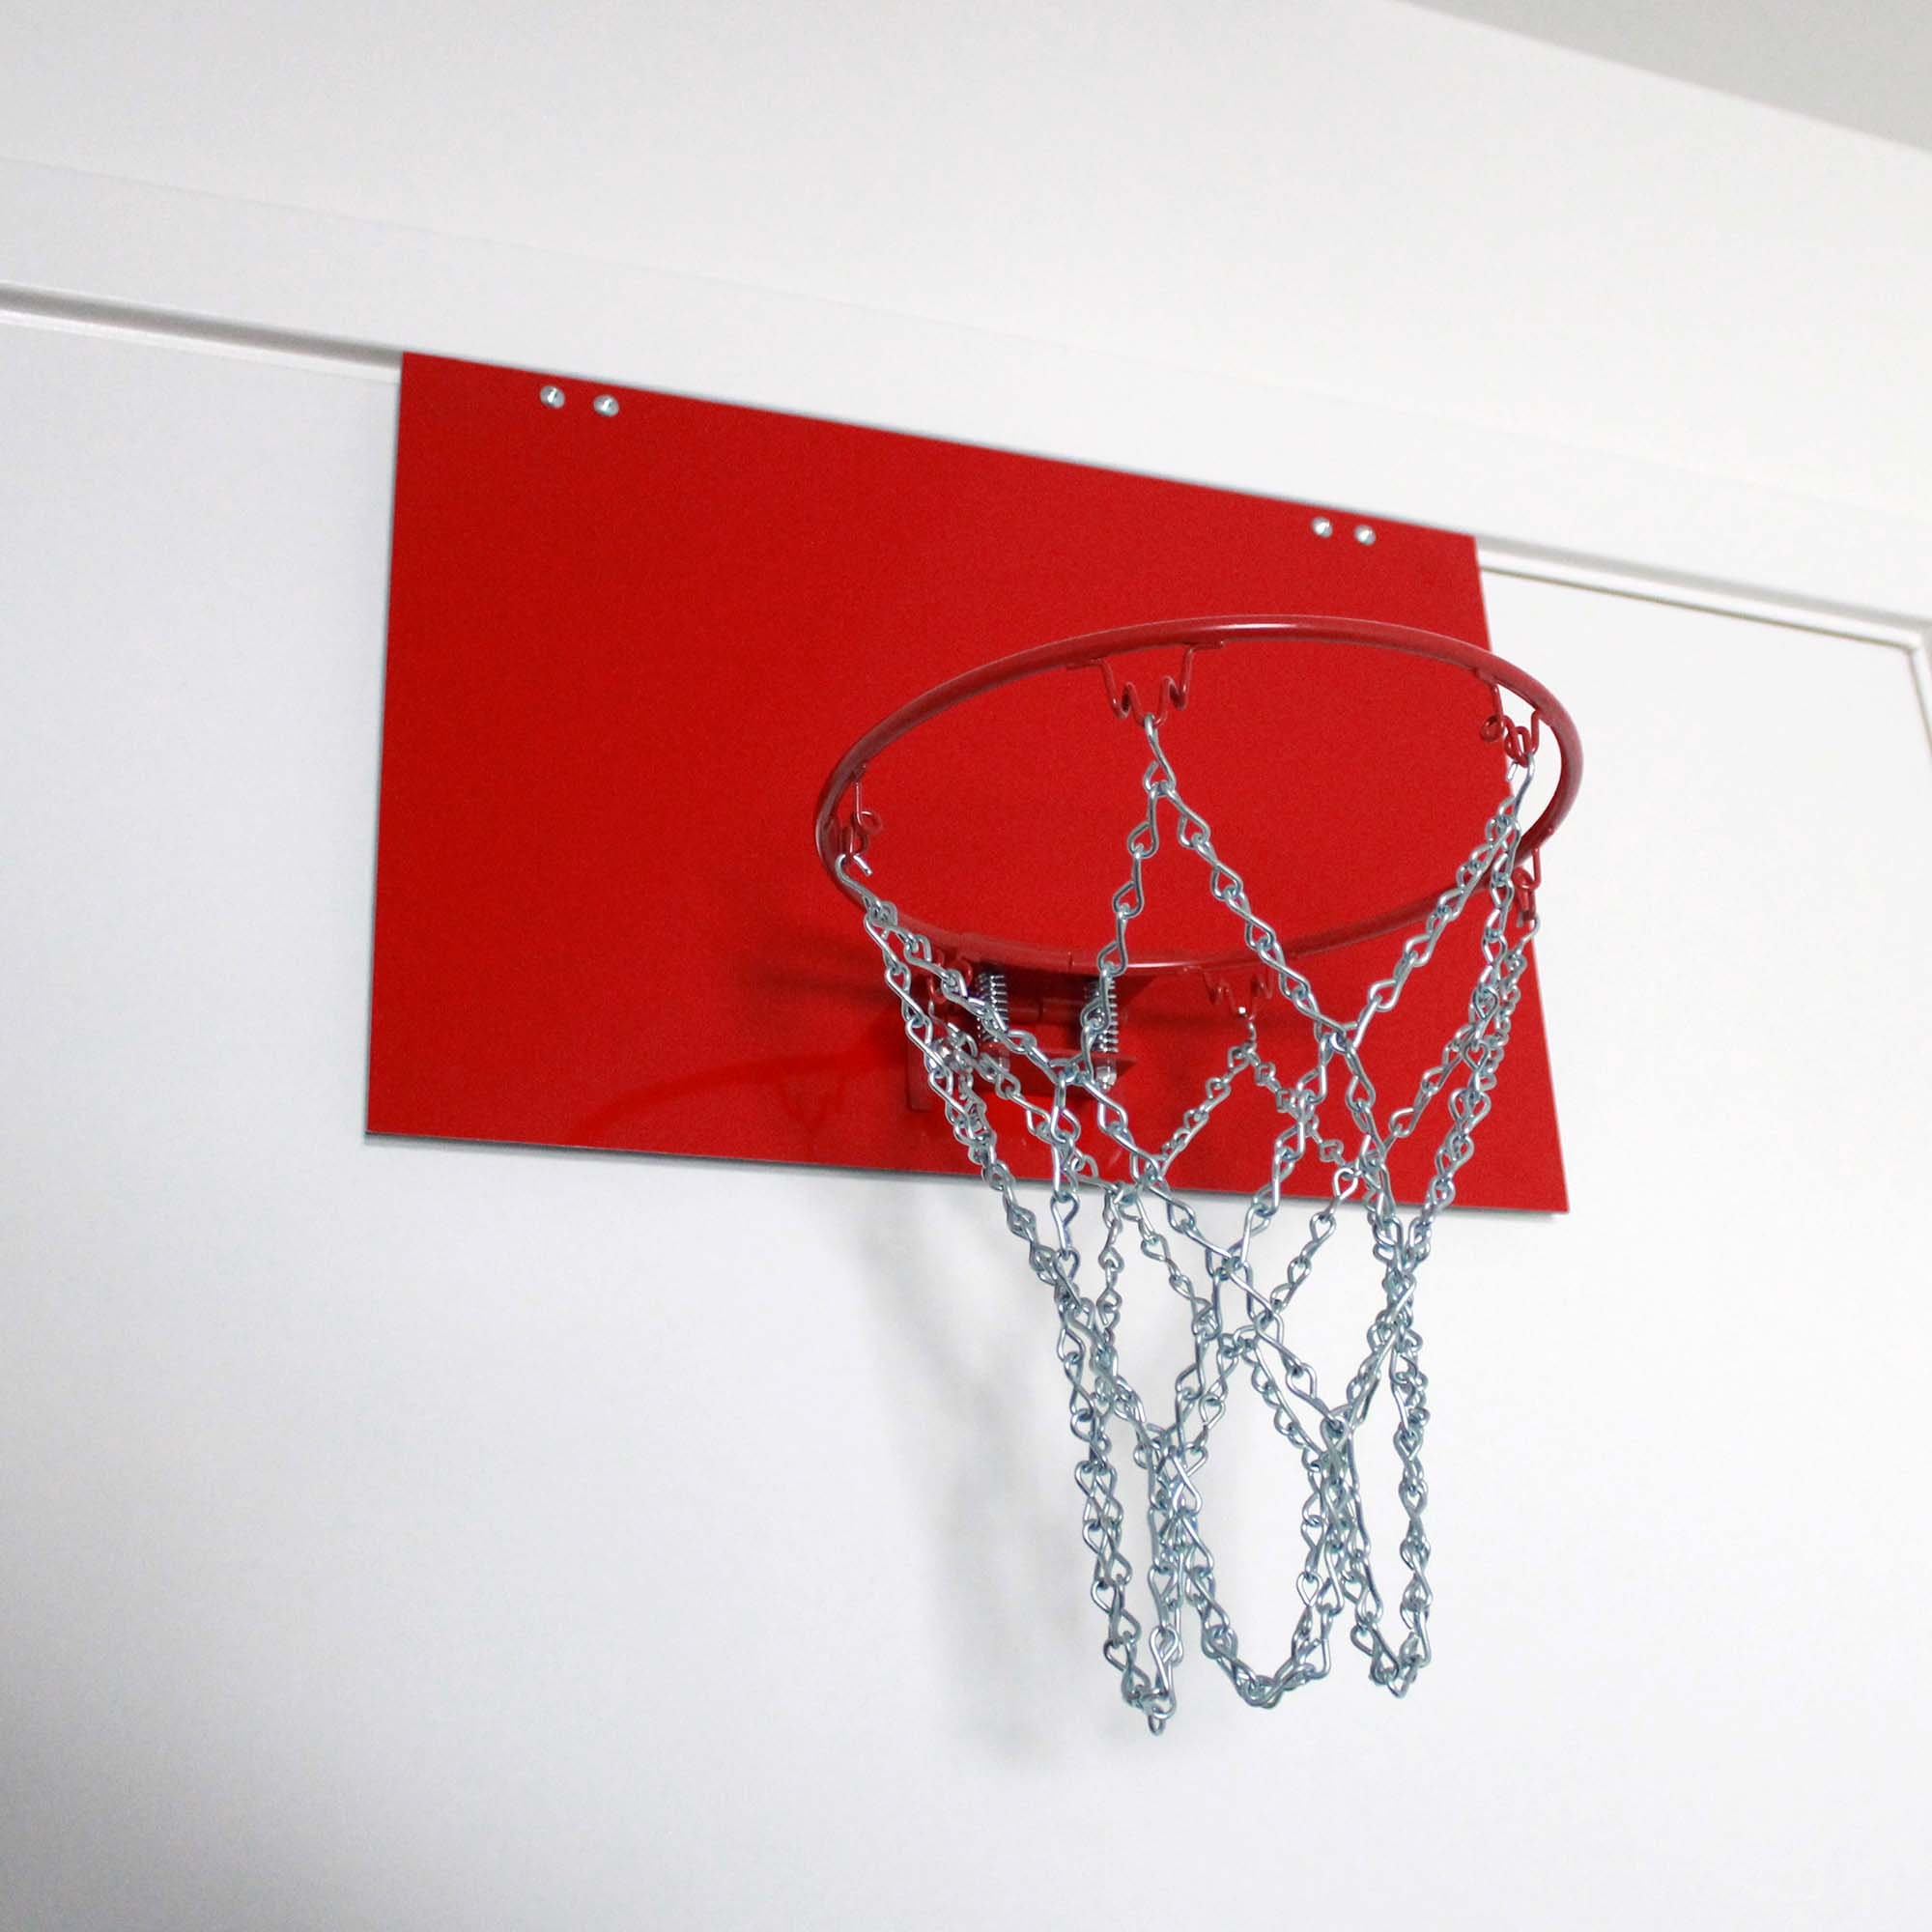 RED Mini Basketball Hoop Red Backboard & Hoop Chain Net 